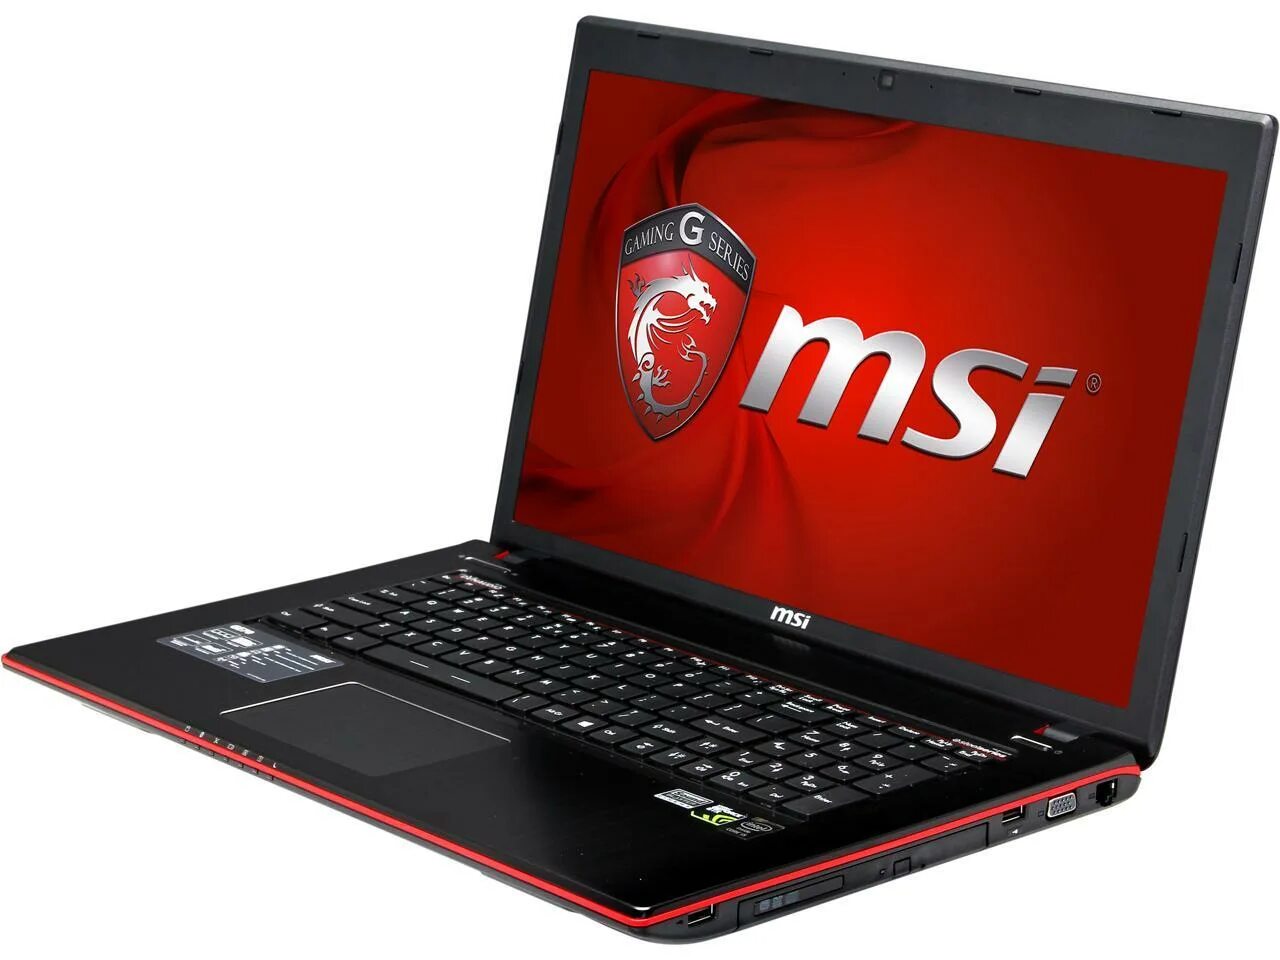 Портативная msi. MSI ge70. Игровой ноутбук MSI ge70. MSI Apache Pro ge70. MSI 2013 ge70.